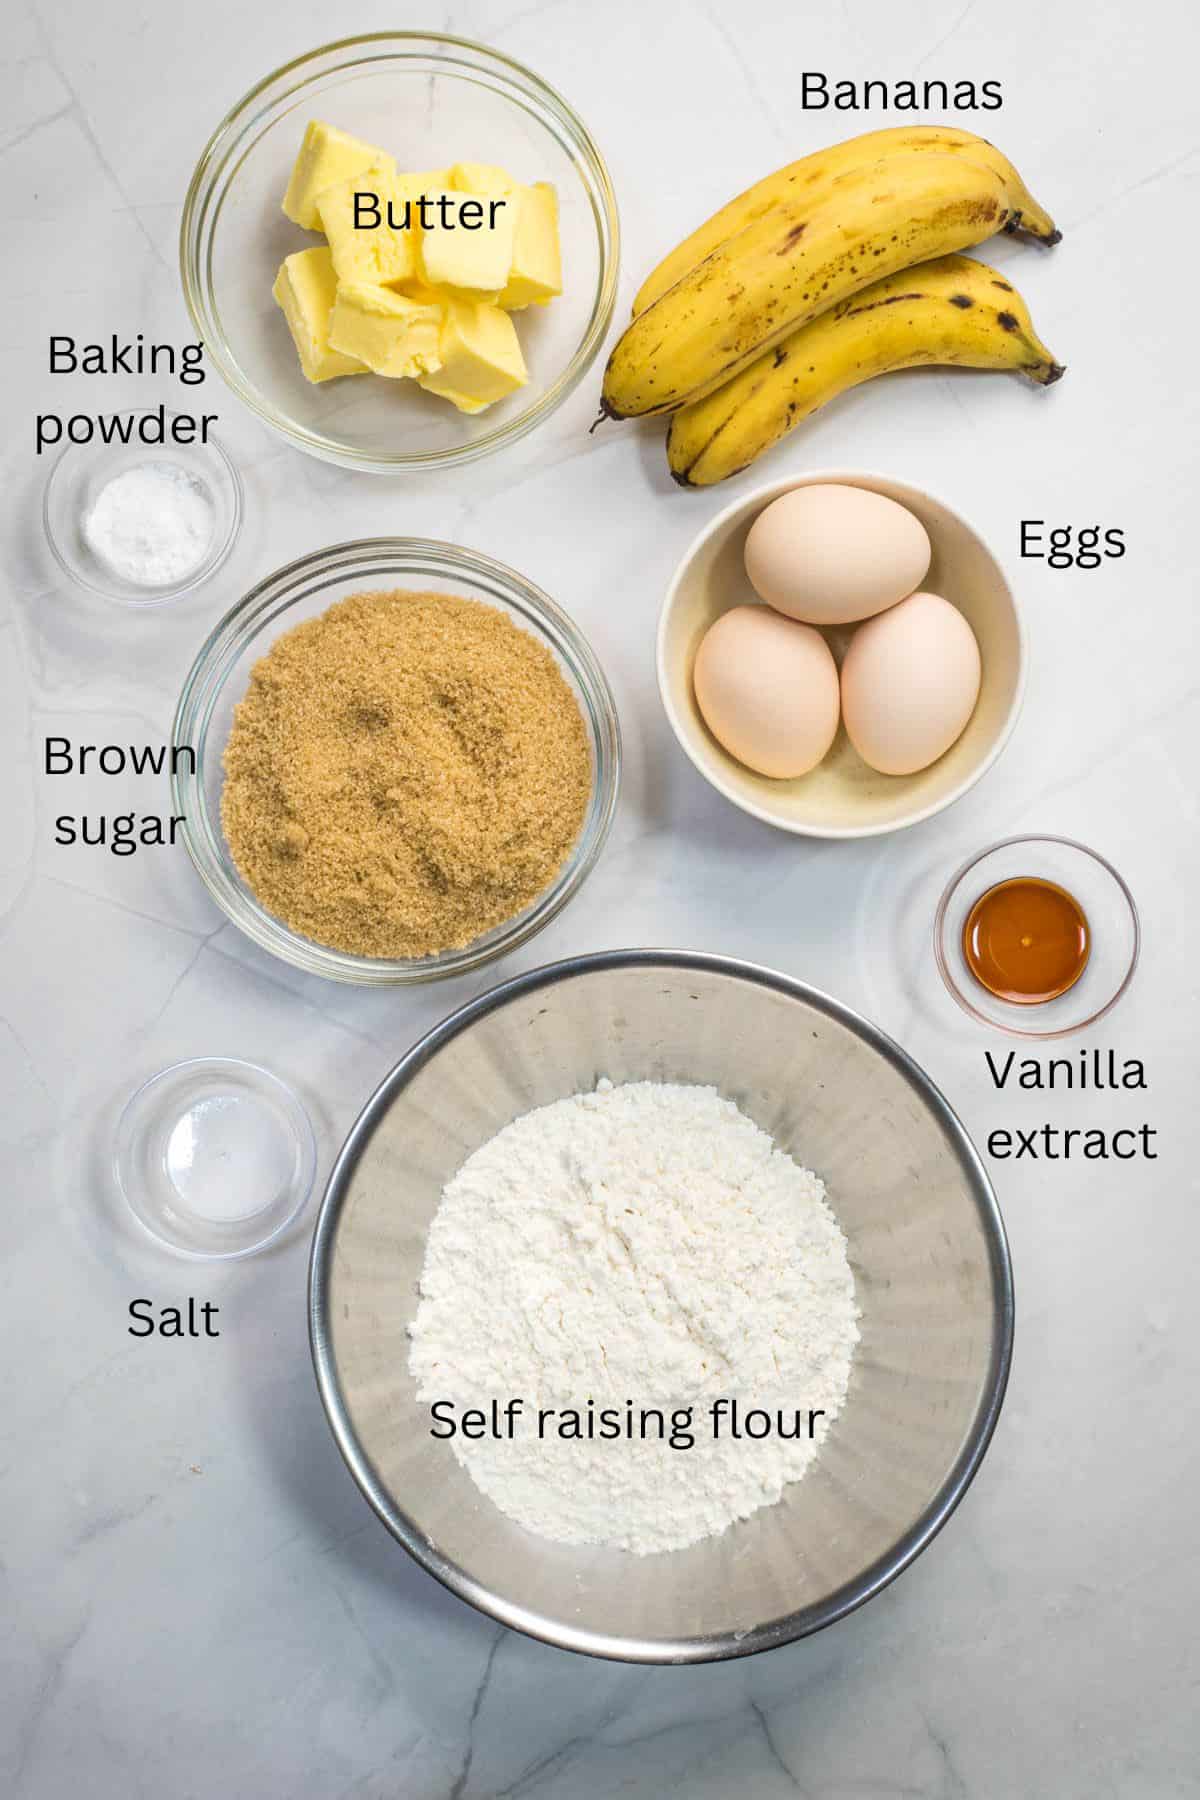 Self raising flour, brown sugar, butter, eggs, vanilla extract, baking powder, salt and bananas against a marble backdrop.